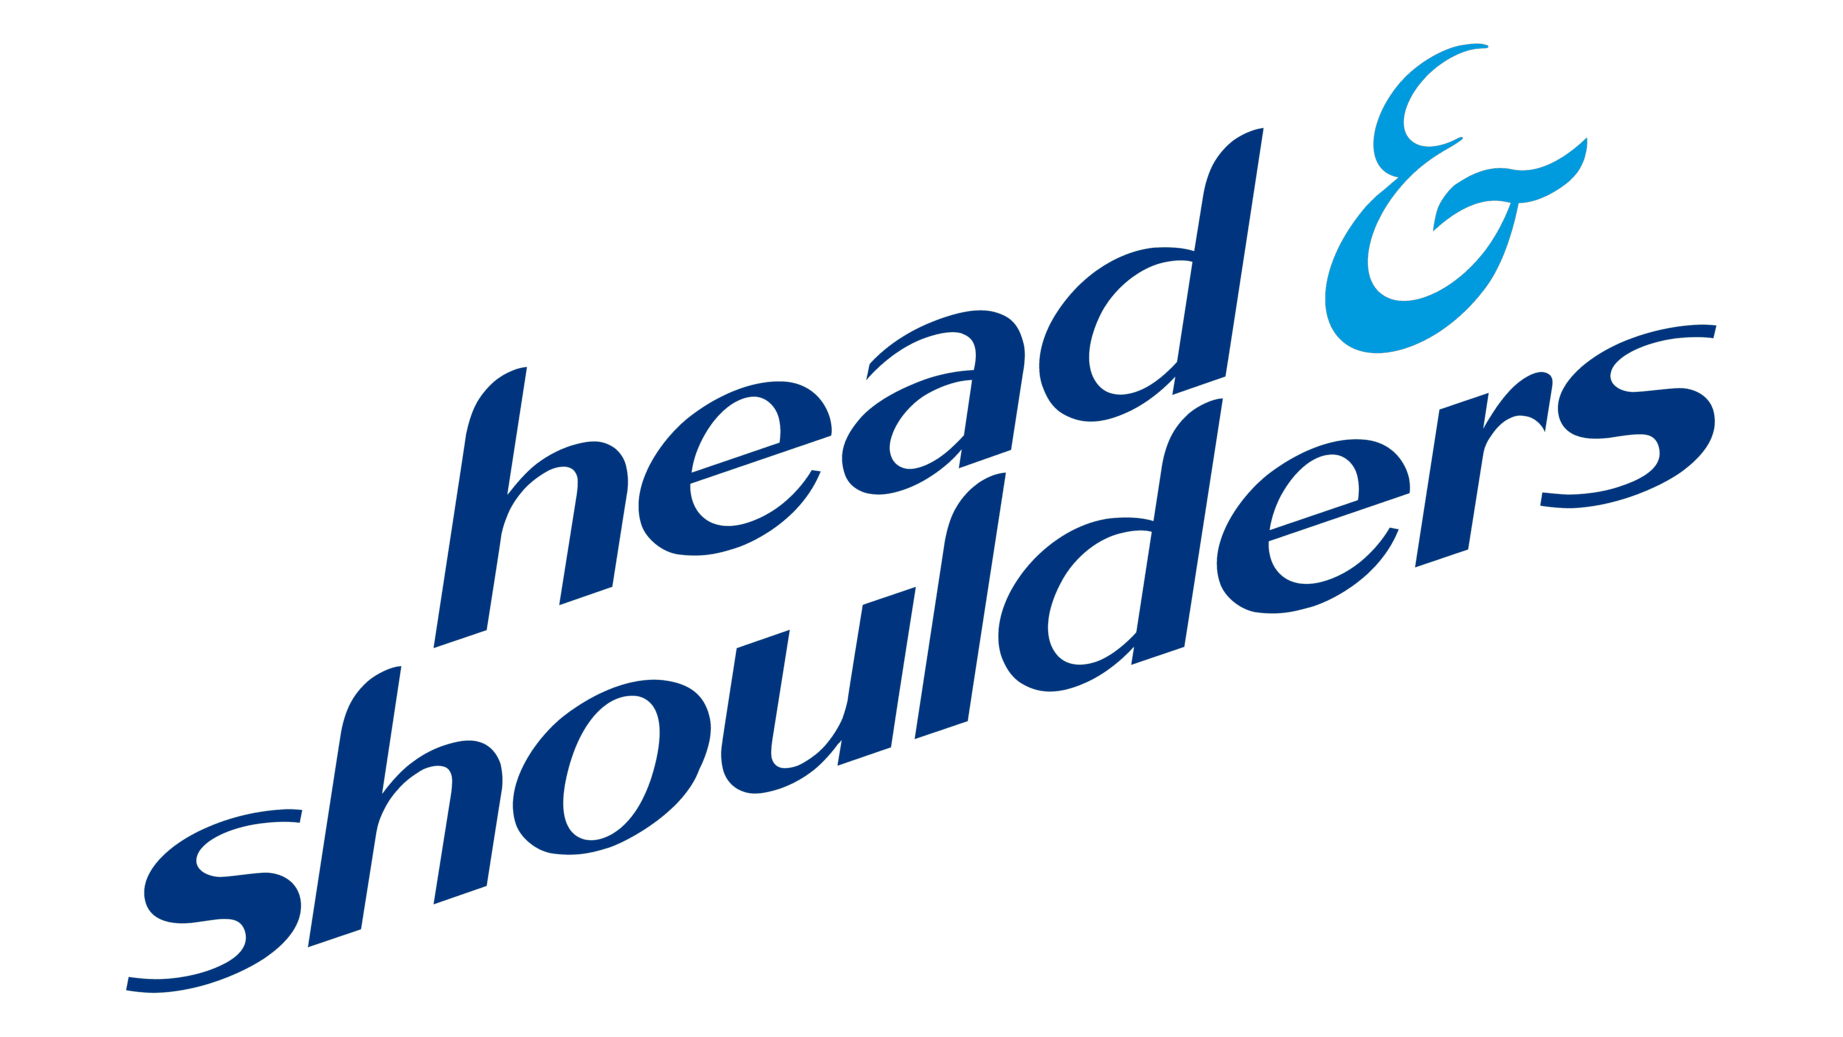 Head shoulders logo